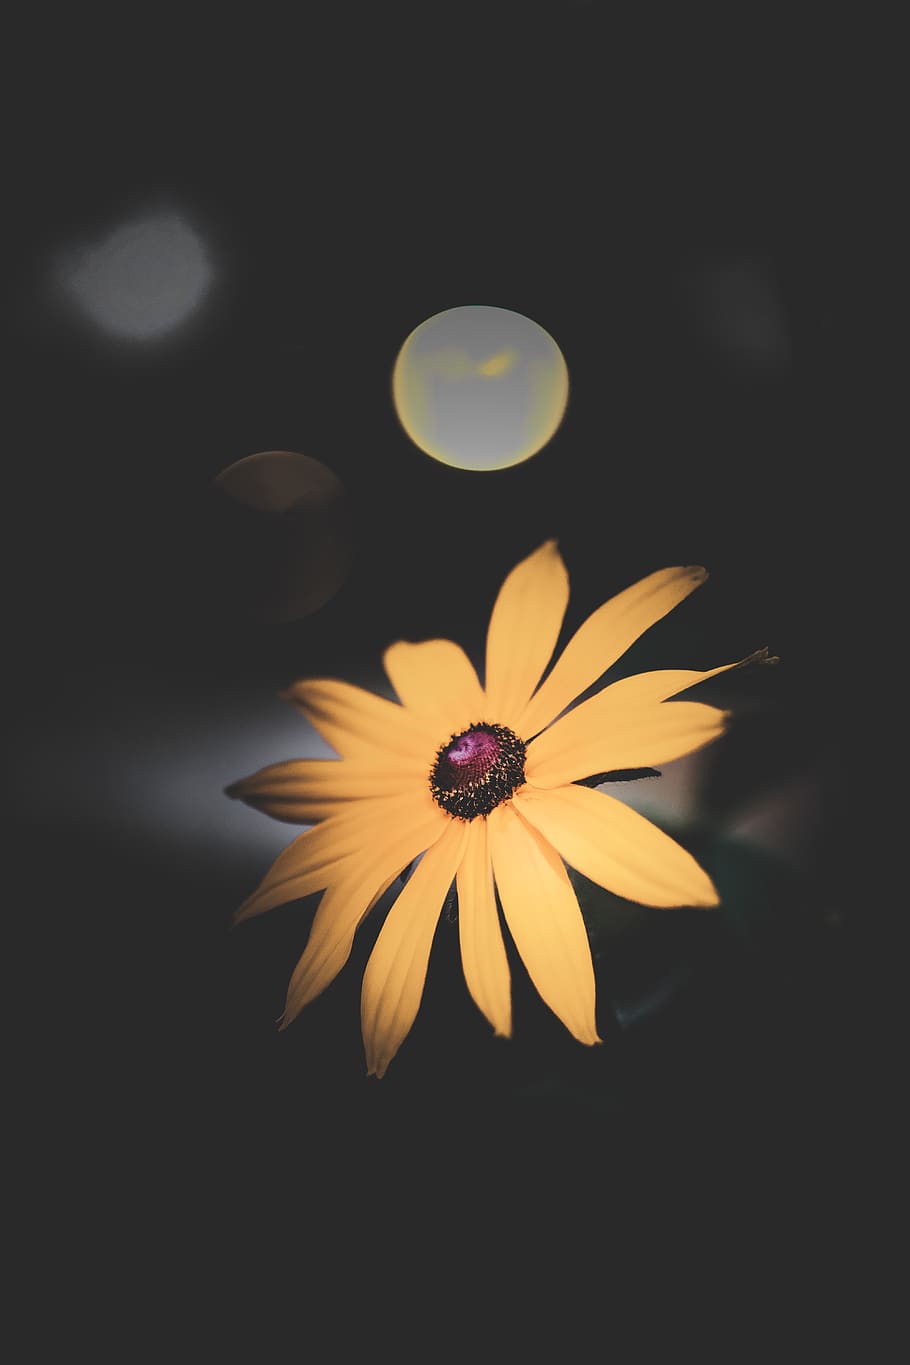 bokeh, focus, depth, yallow, sunflower, flowering plant, petal